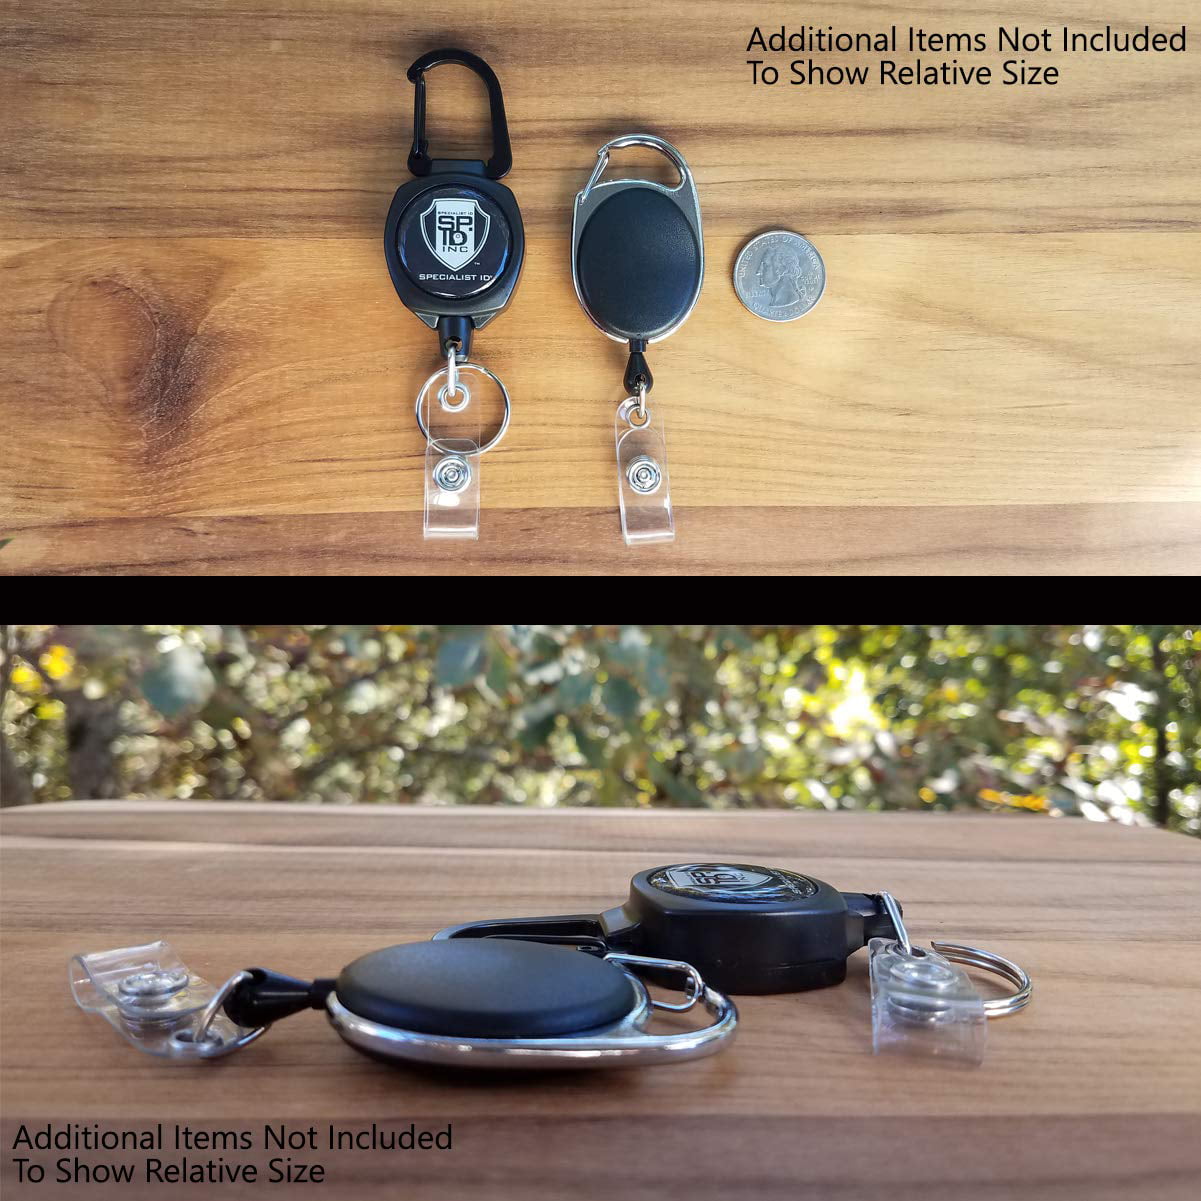 ELV Retractable ID Badge Holder Retractable Keychain Badge Reel